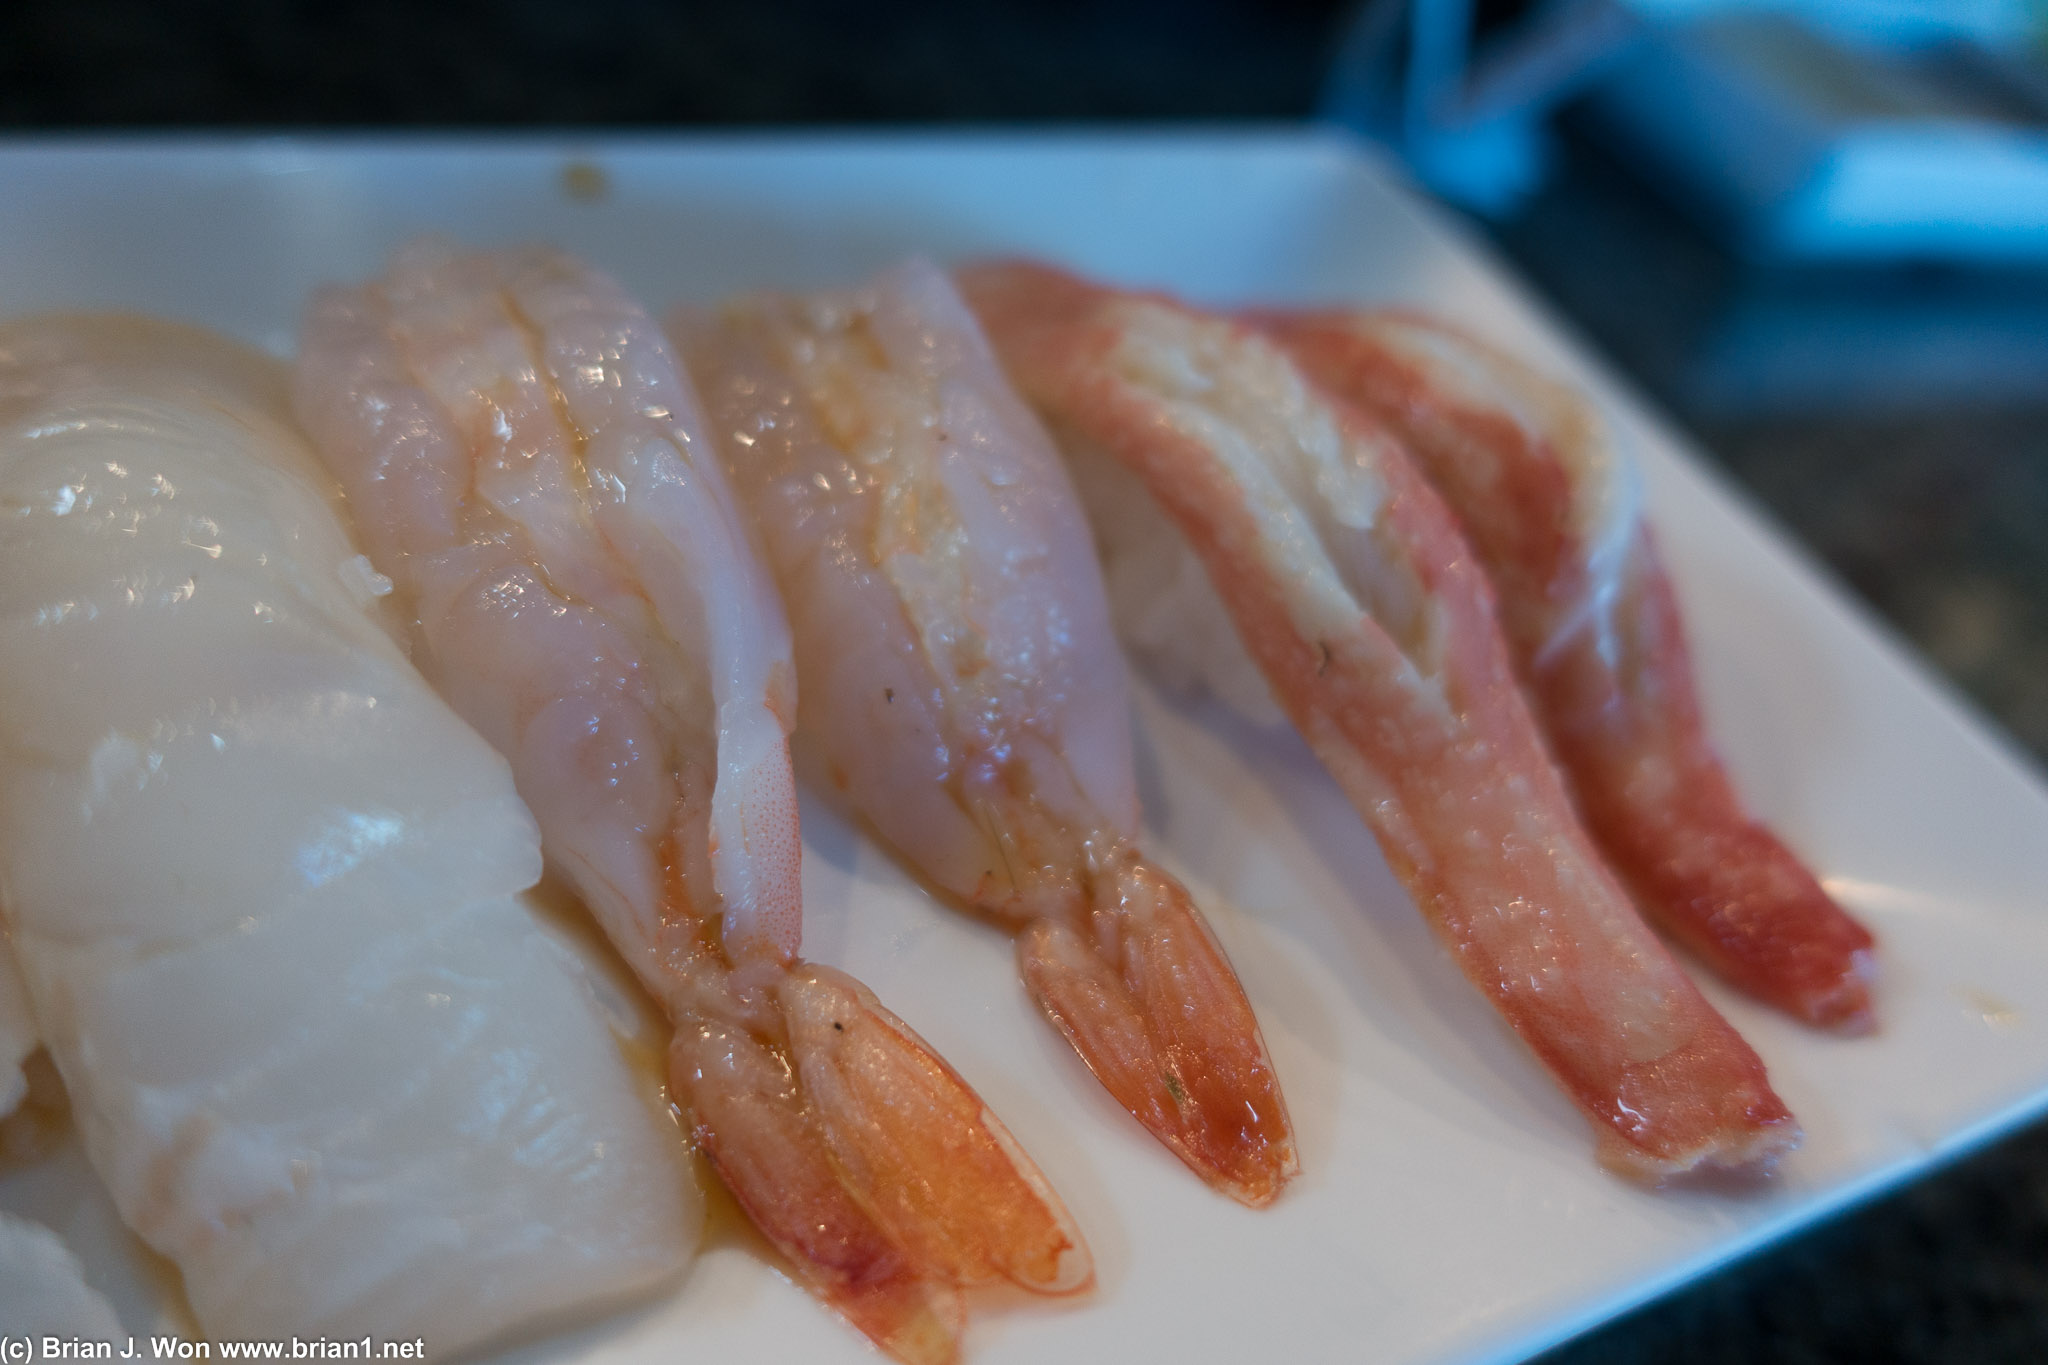 All were pretty bland-- halibut, shrimp, snow crab.